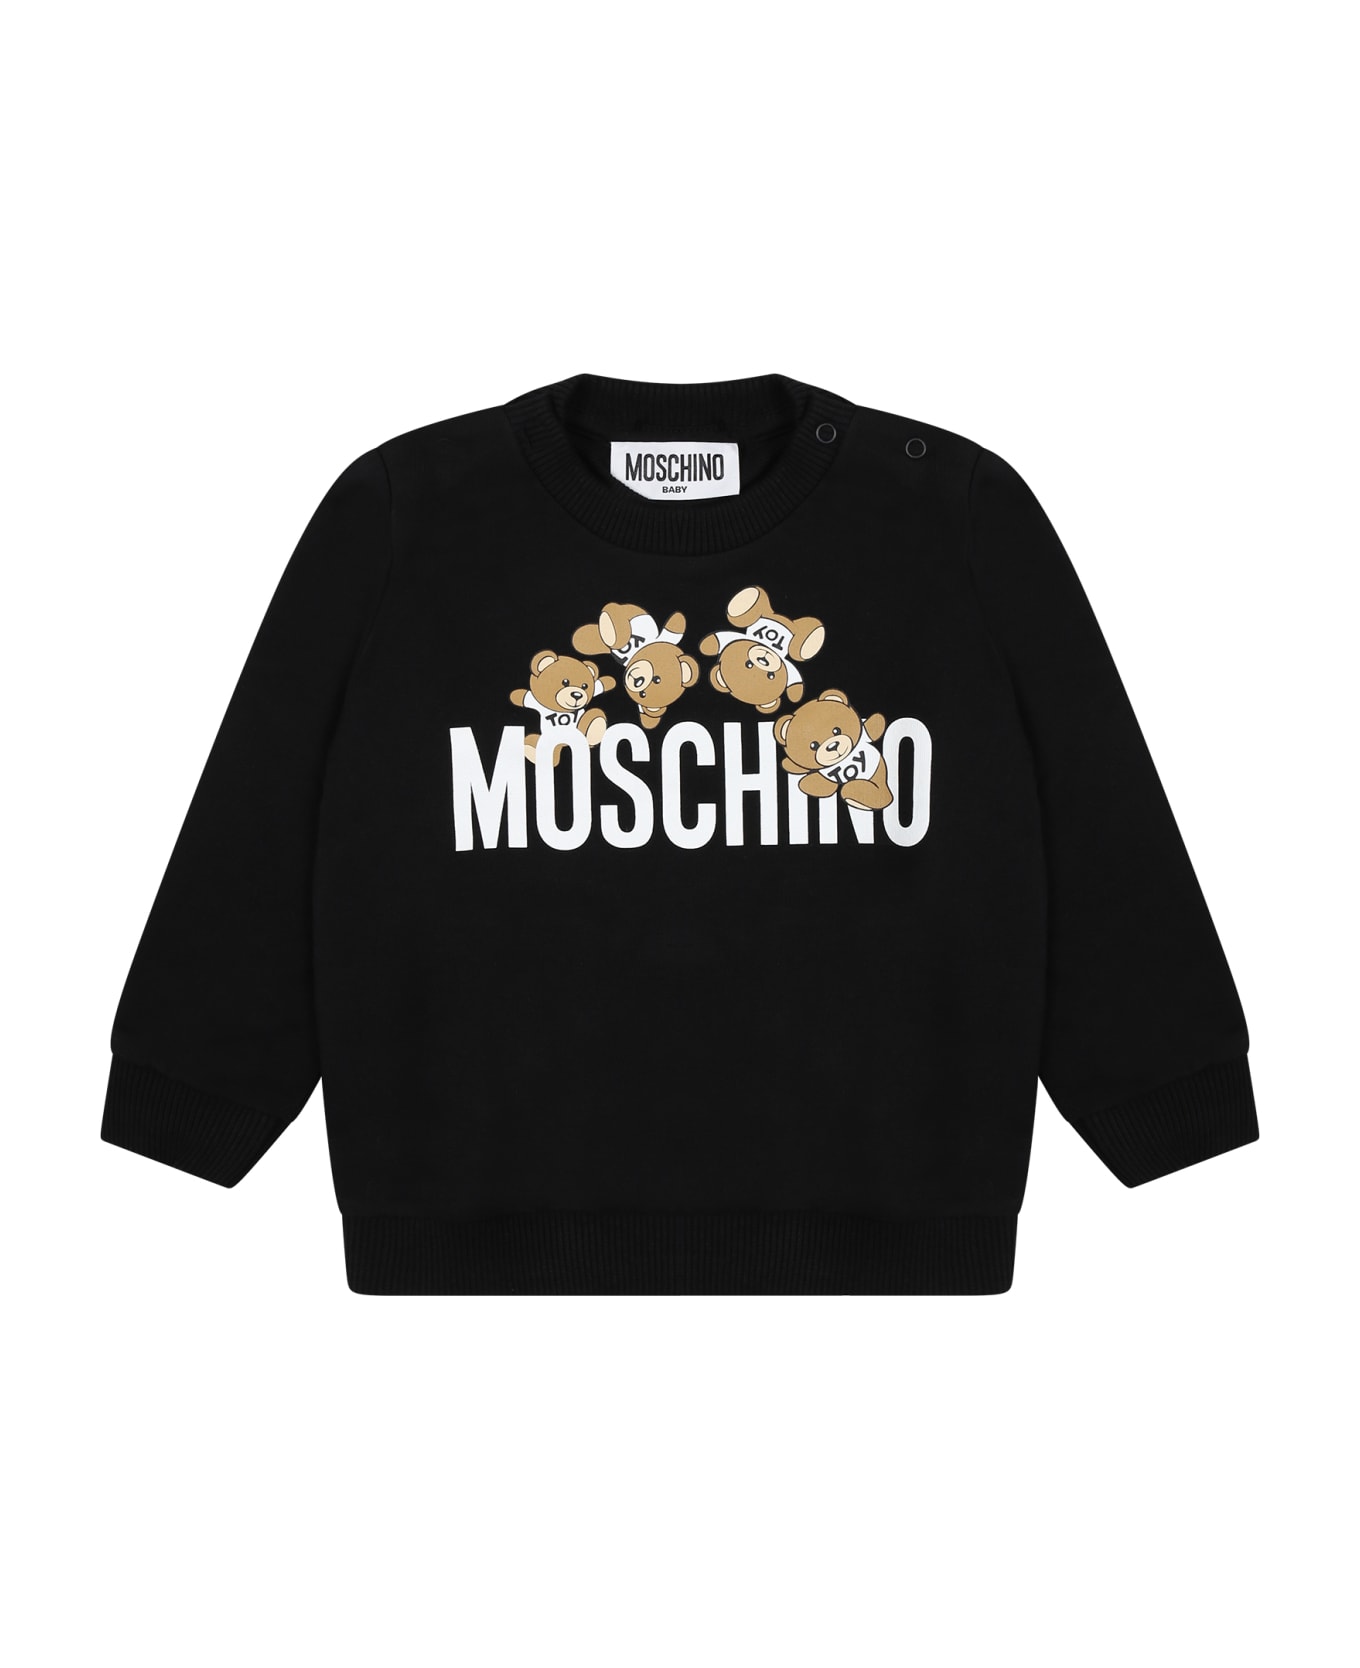 Moschino Black Sweatshirt For Babies With Teddy Bears And Logo - Black